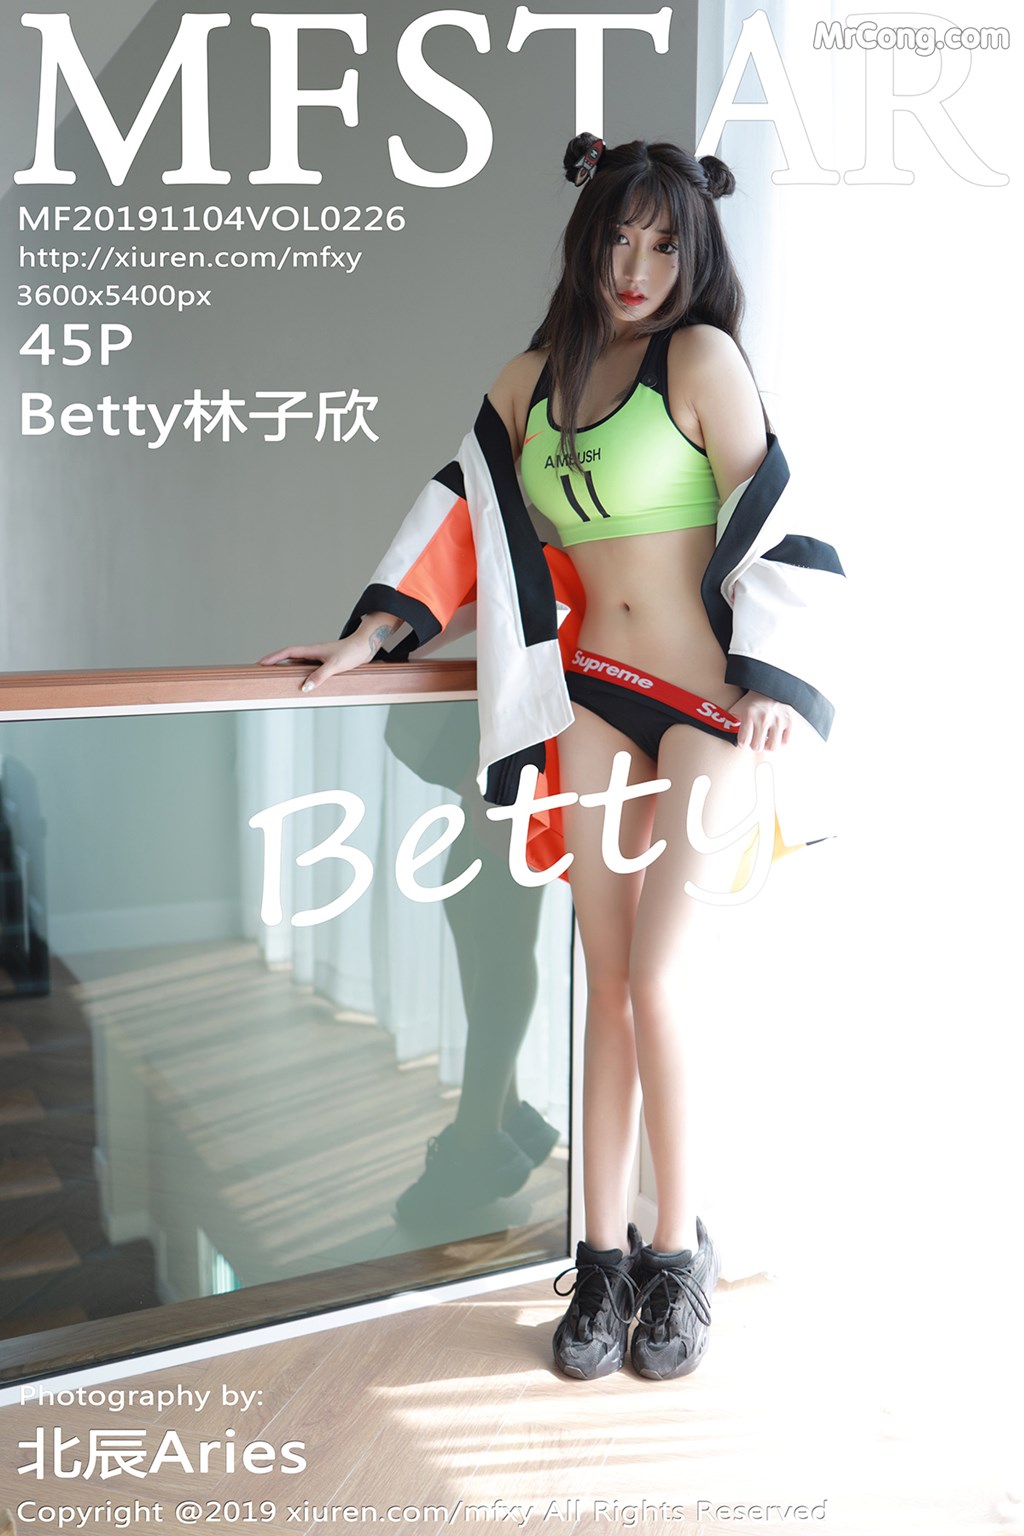 MFStar Vol. 262: Betty 林子欣 (46 photos)